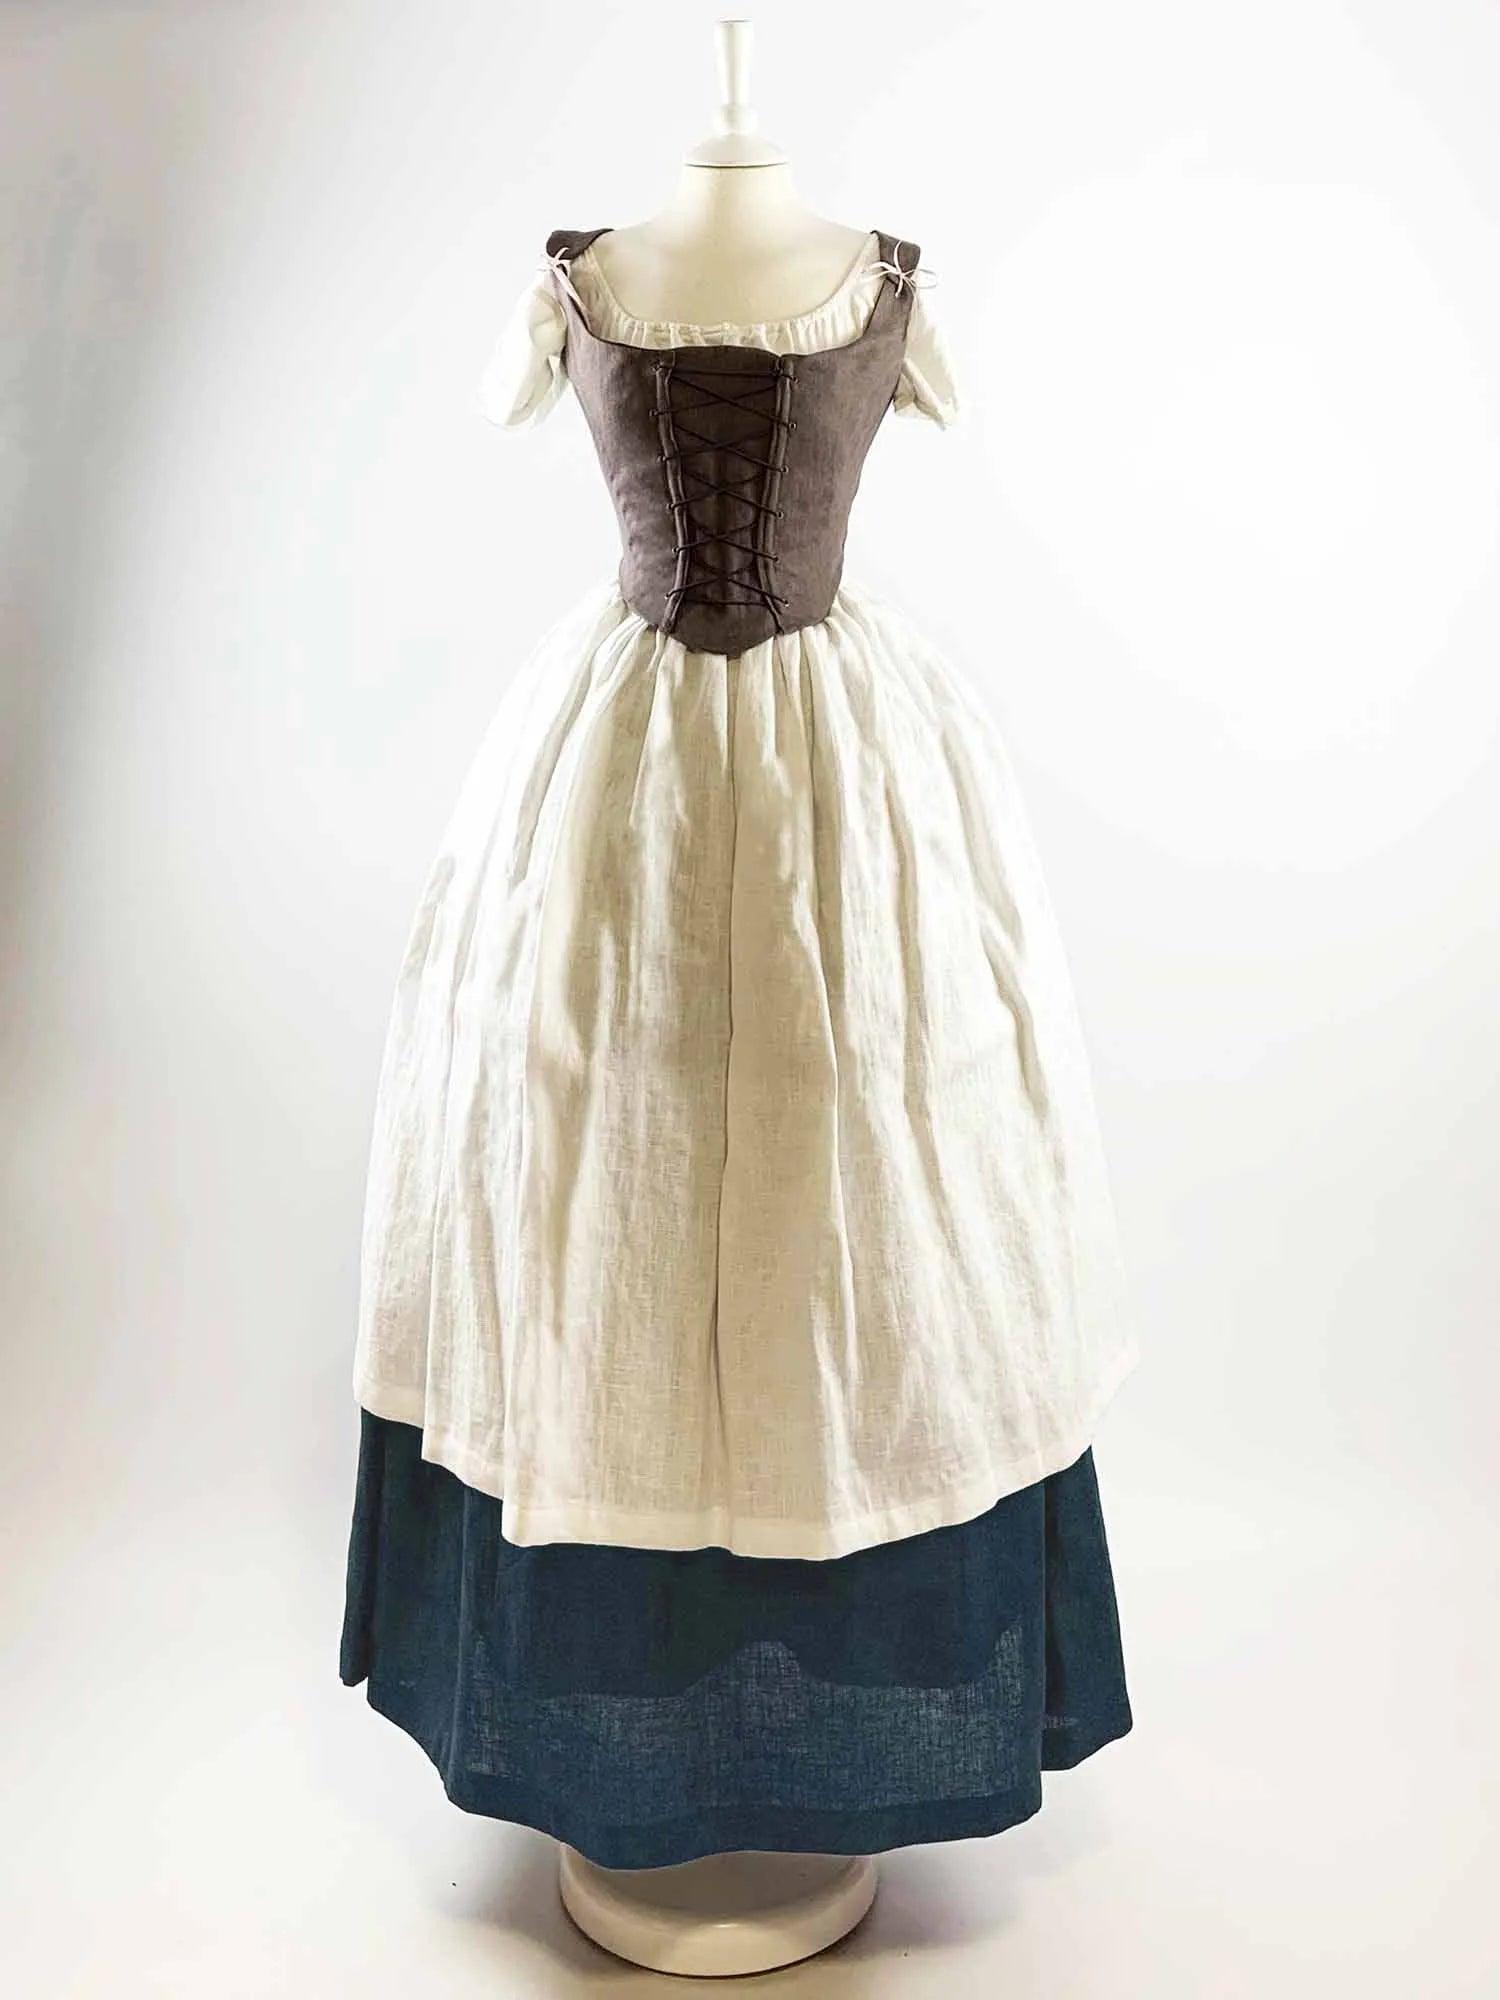 ISOLDE, Renaissance Costume in Brown Gray & Ocean Blue Linen - Atelier Serraspina - Costume Renaissance en Lin Marron-Gris & Bleu Océan